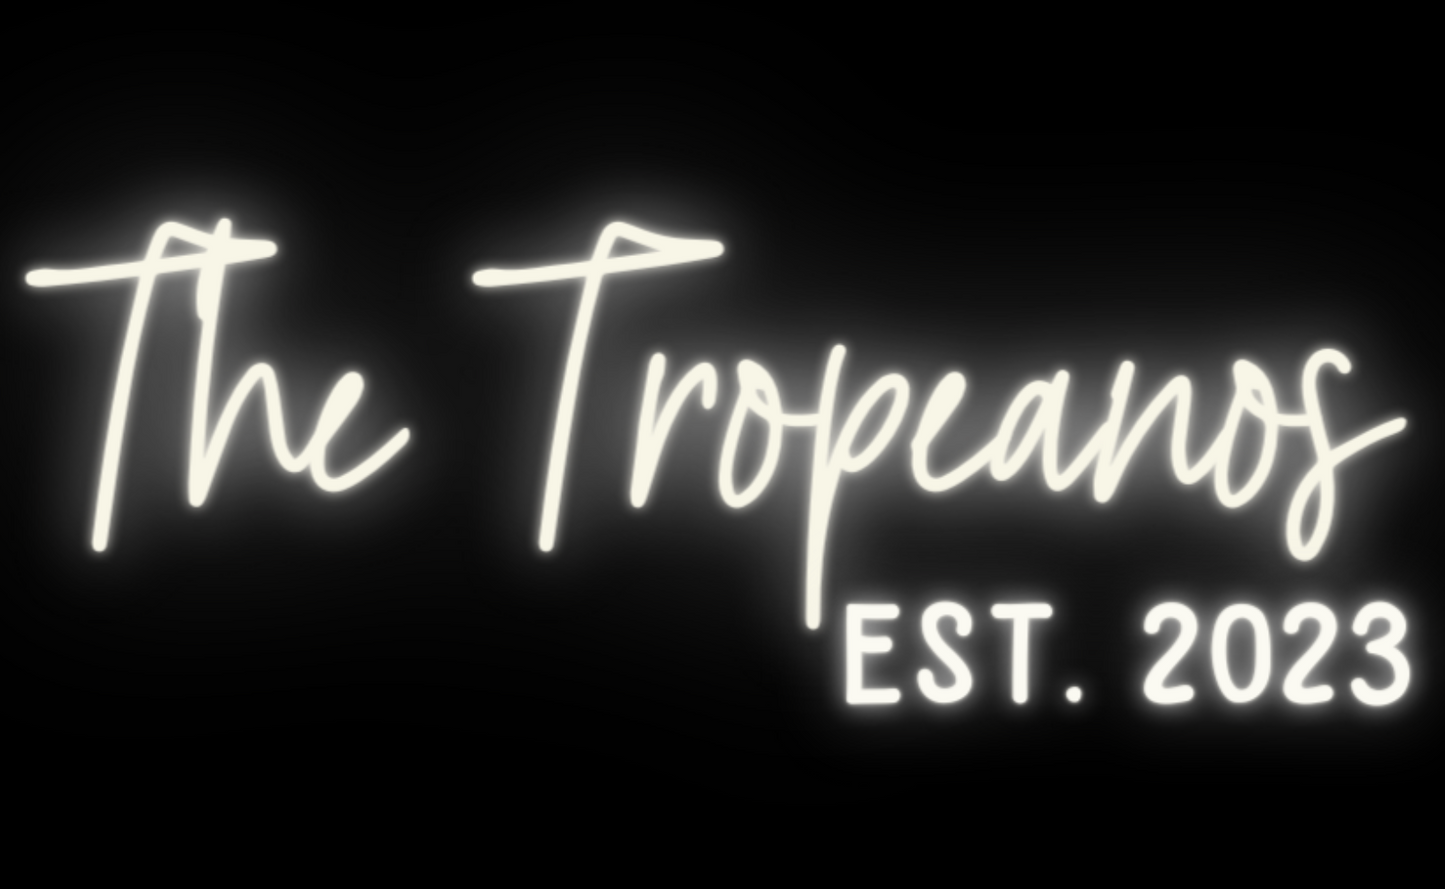 The Tropeanos EST. 2023